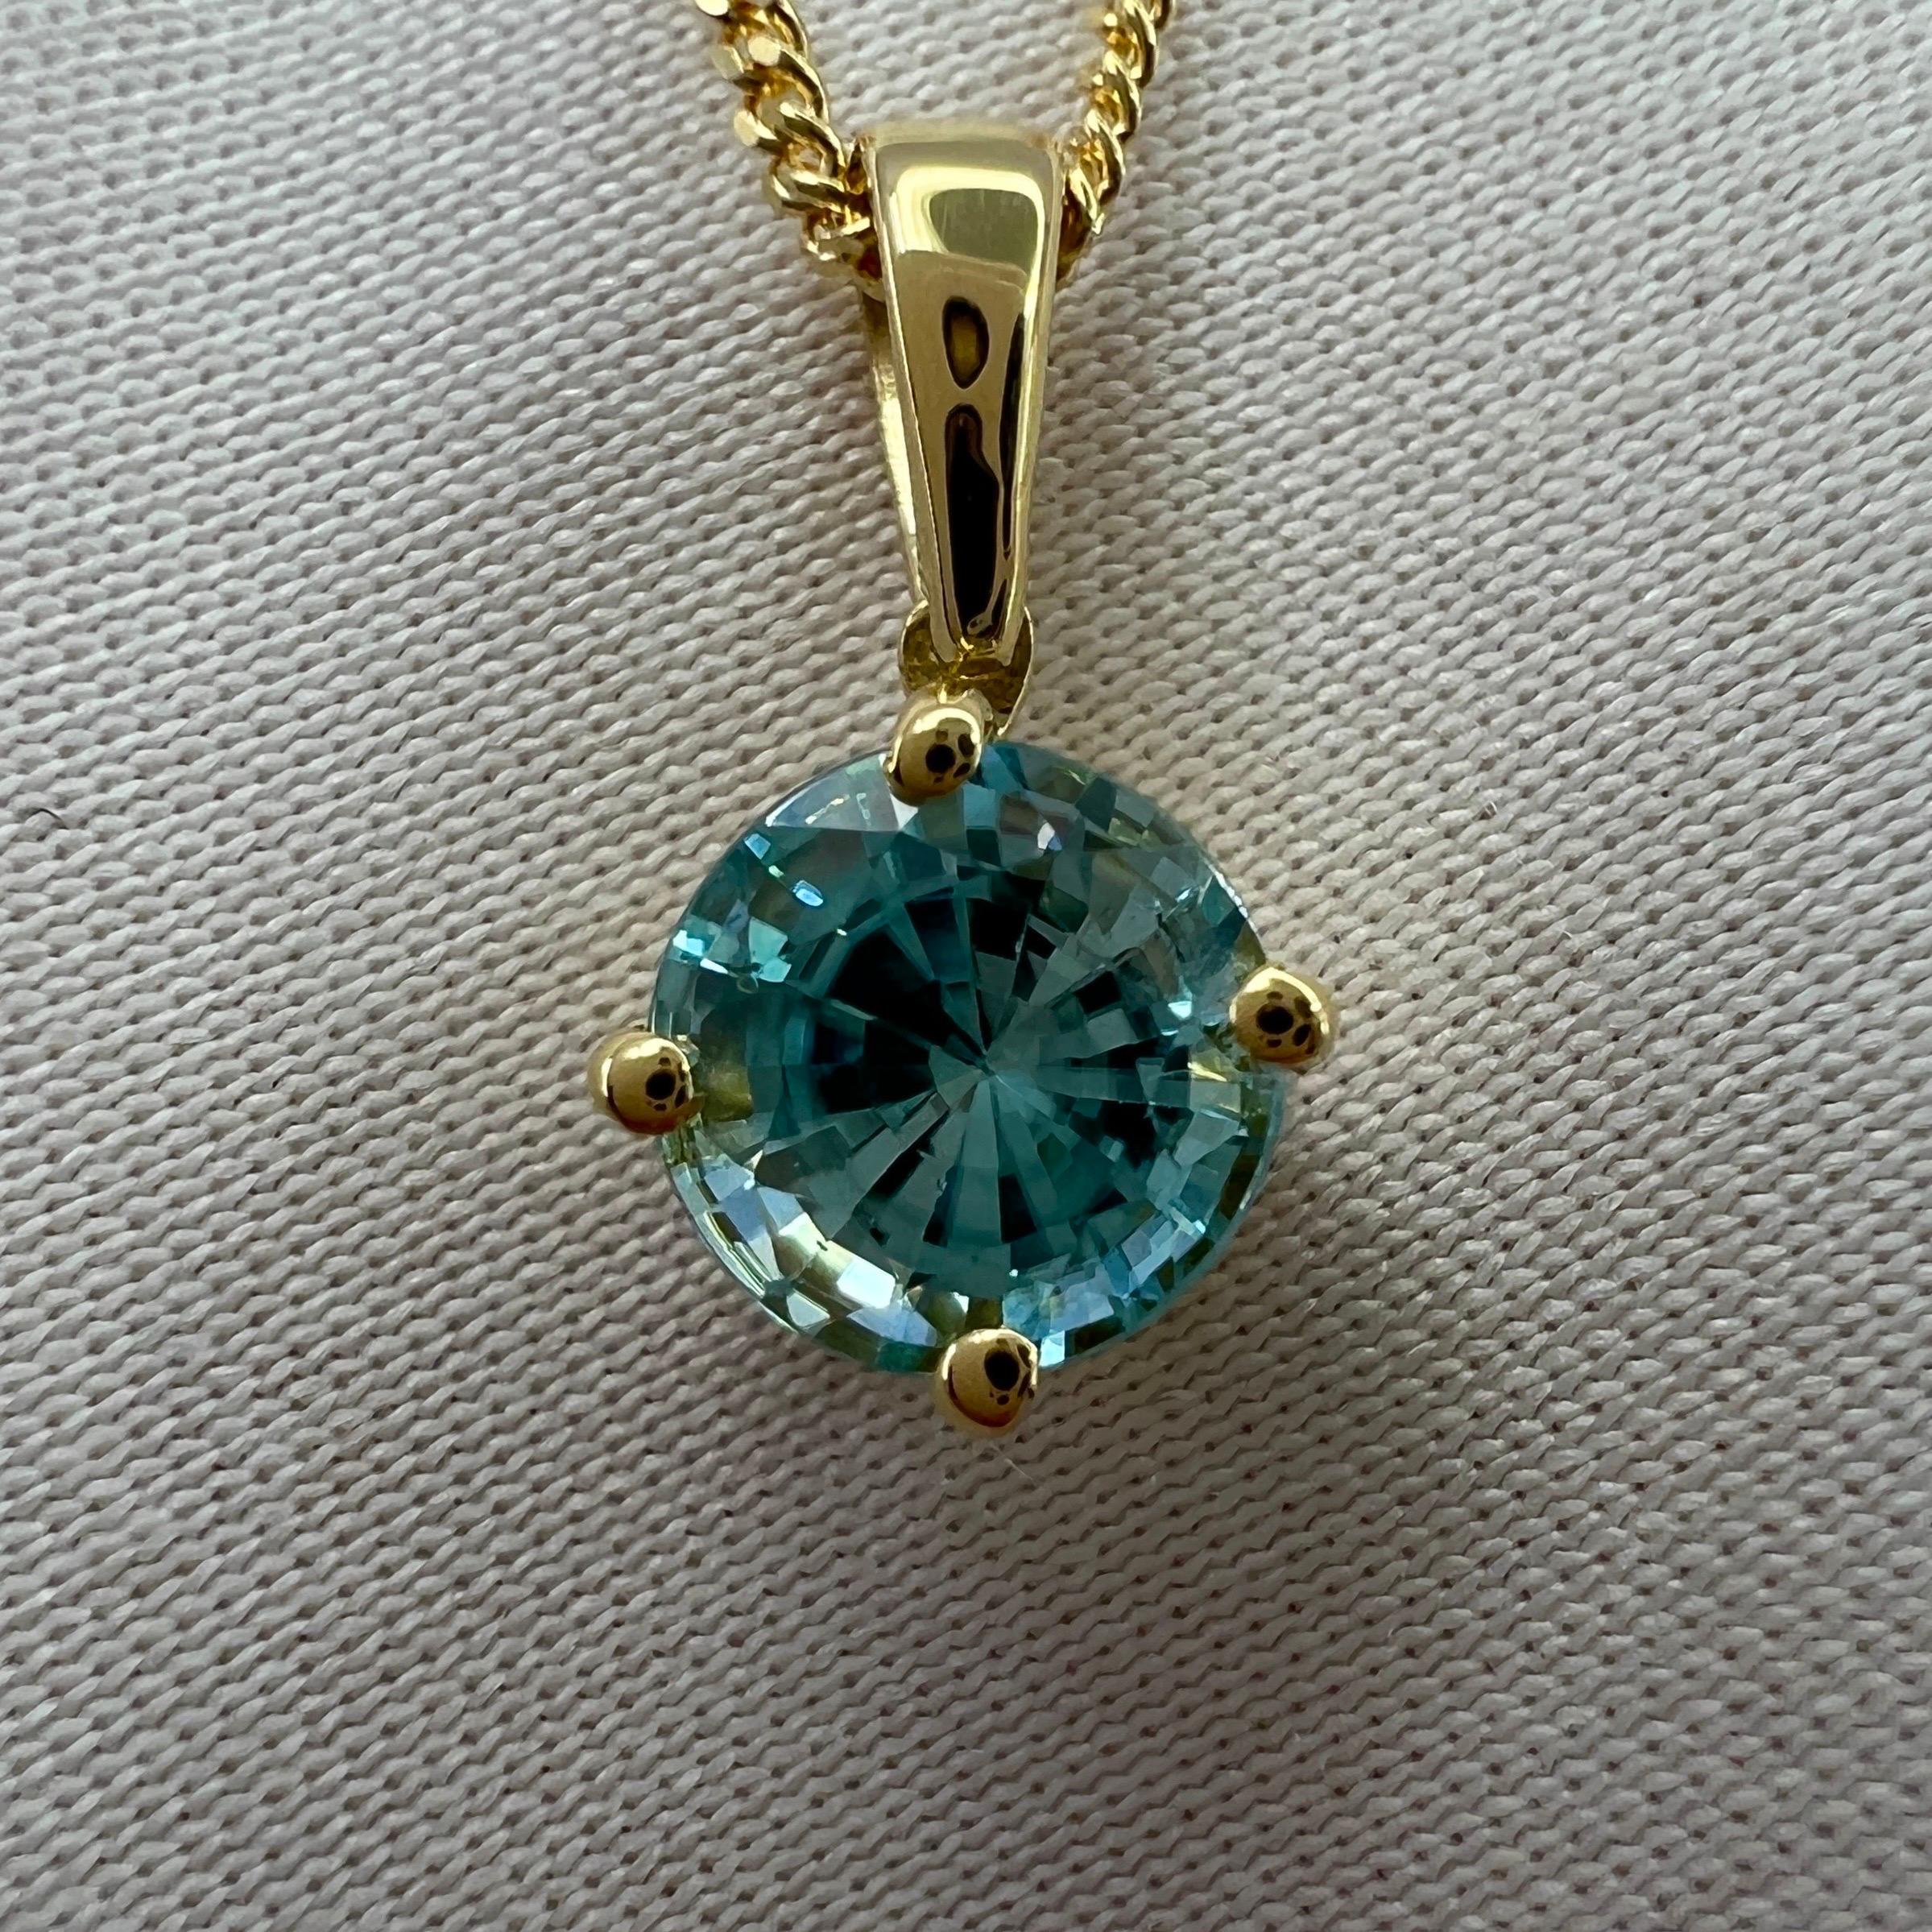 Collier pendentif en or jaune 18 carats avec zircon bleu fluo de 1,20 carat, taille ronde en vente 3